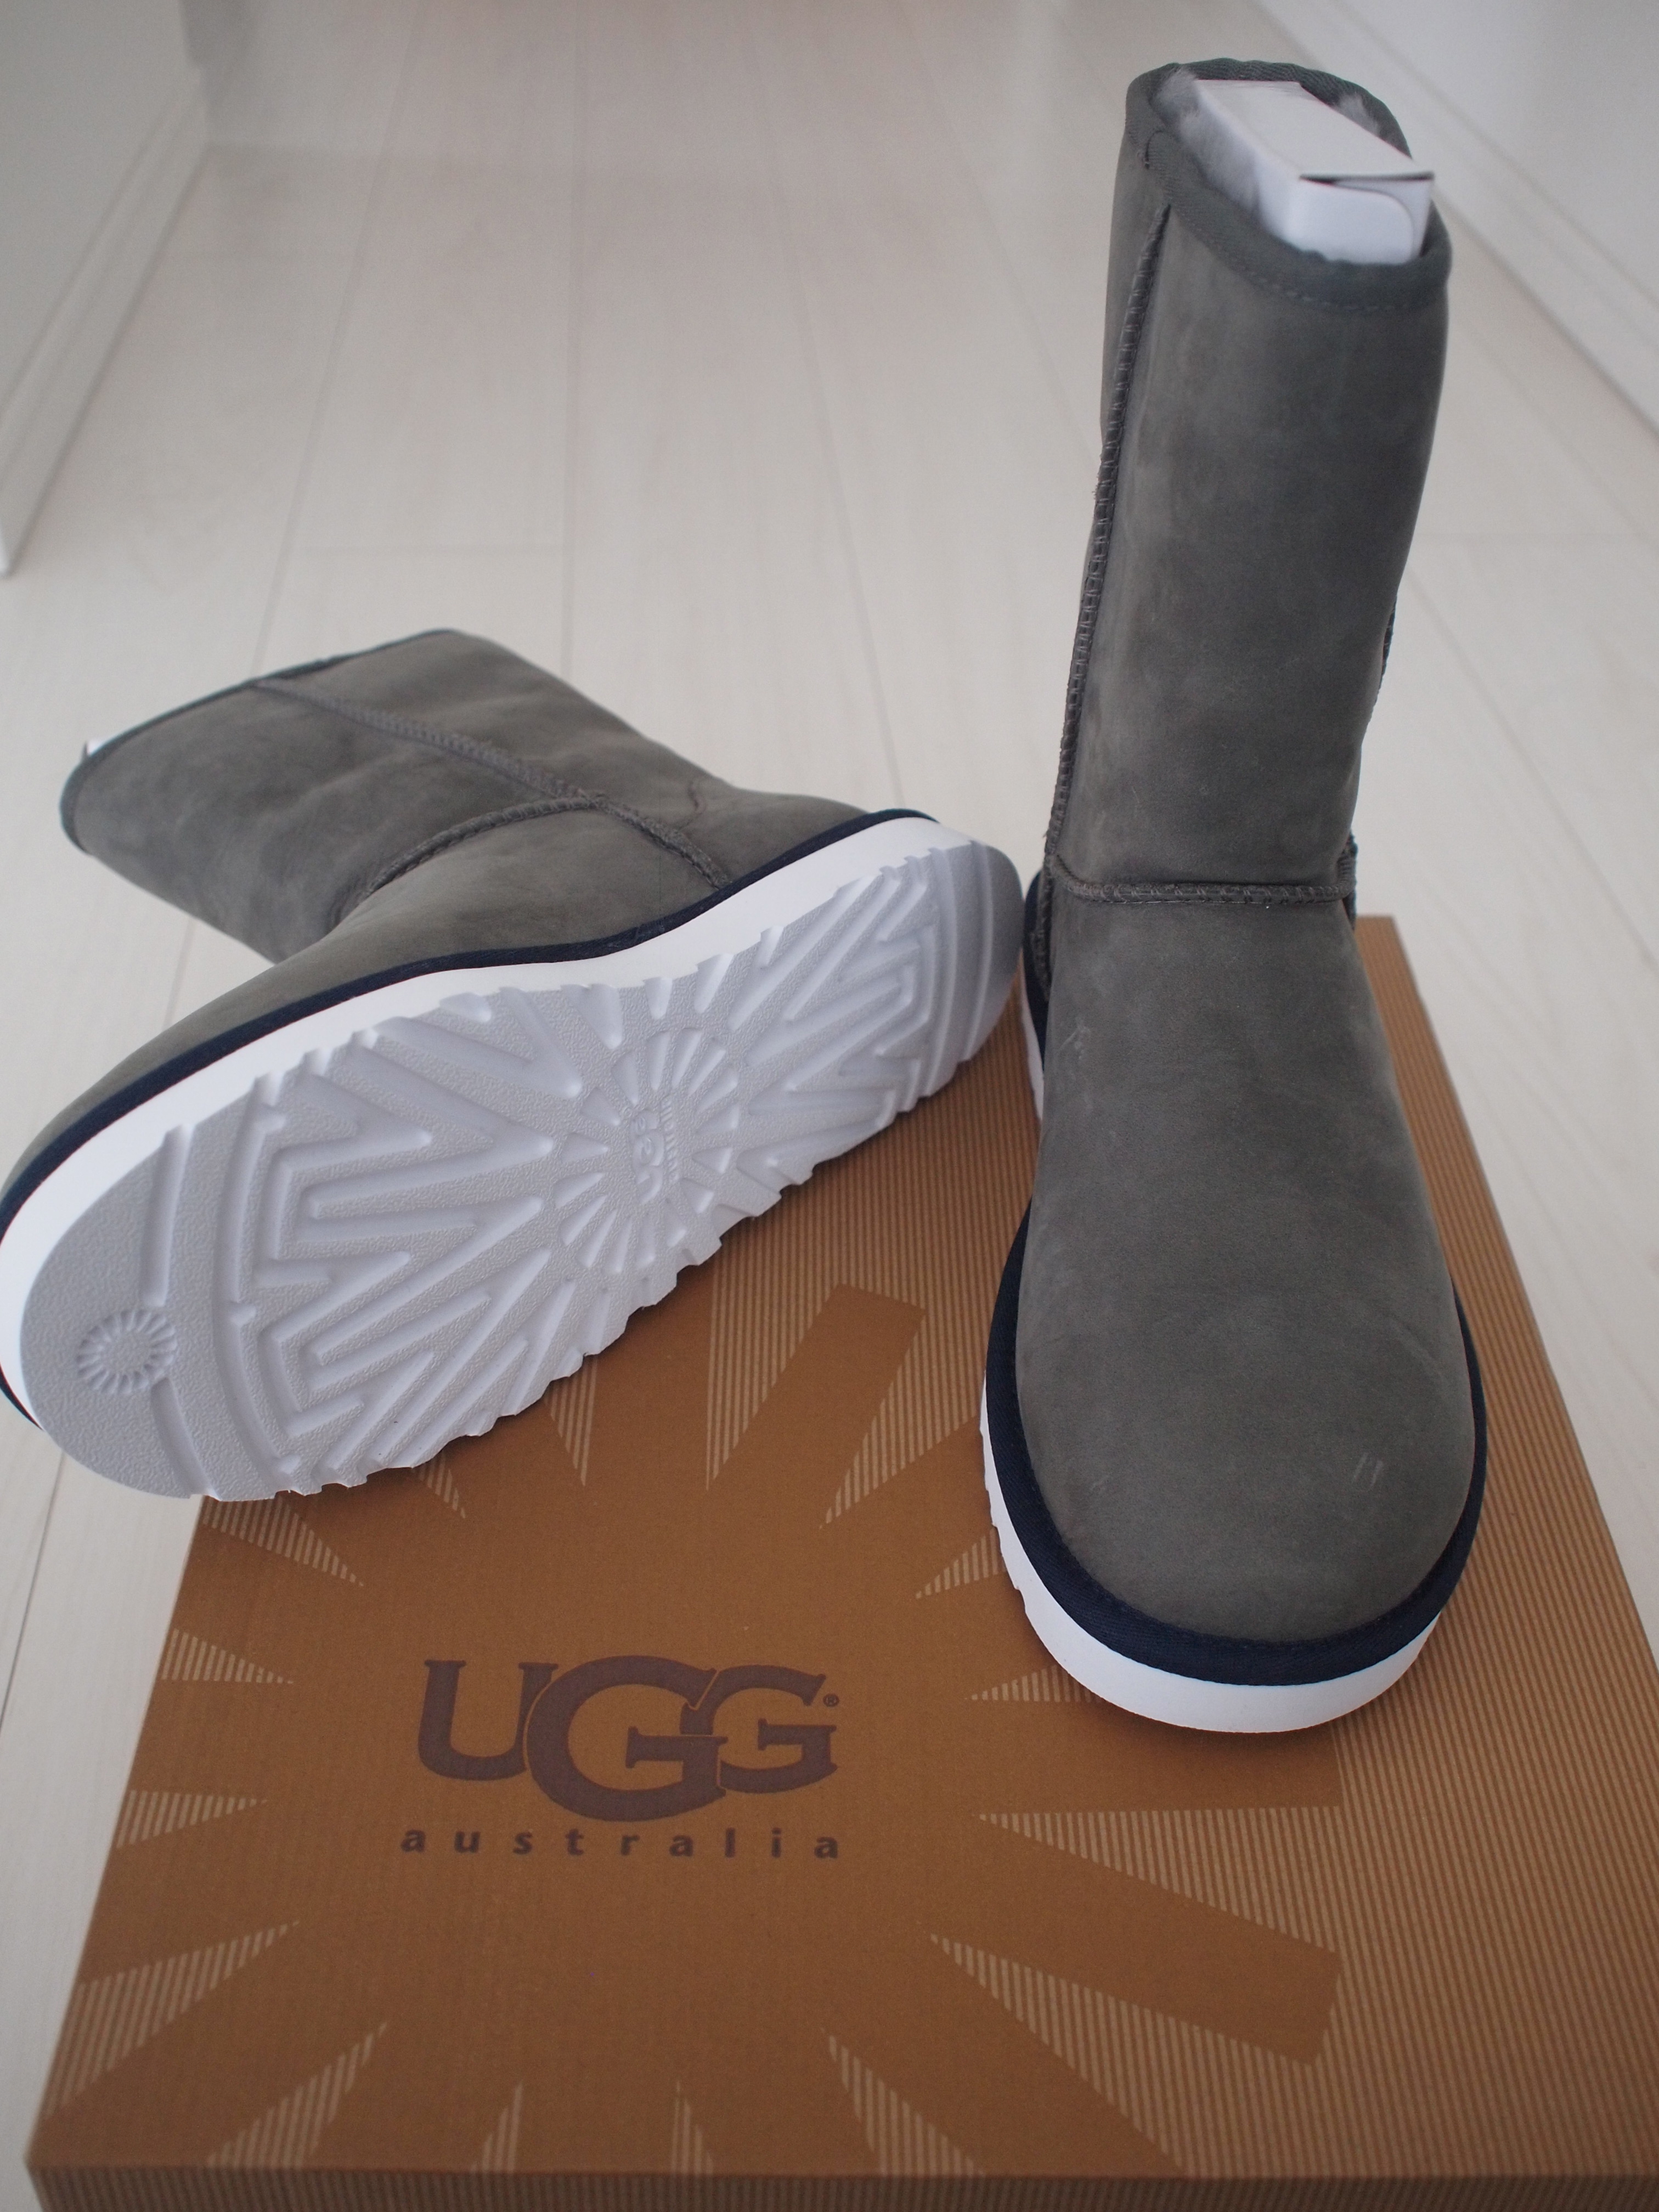 UGG Australia mens boots